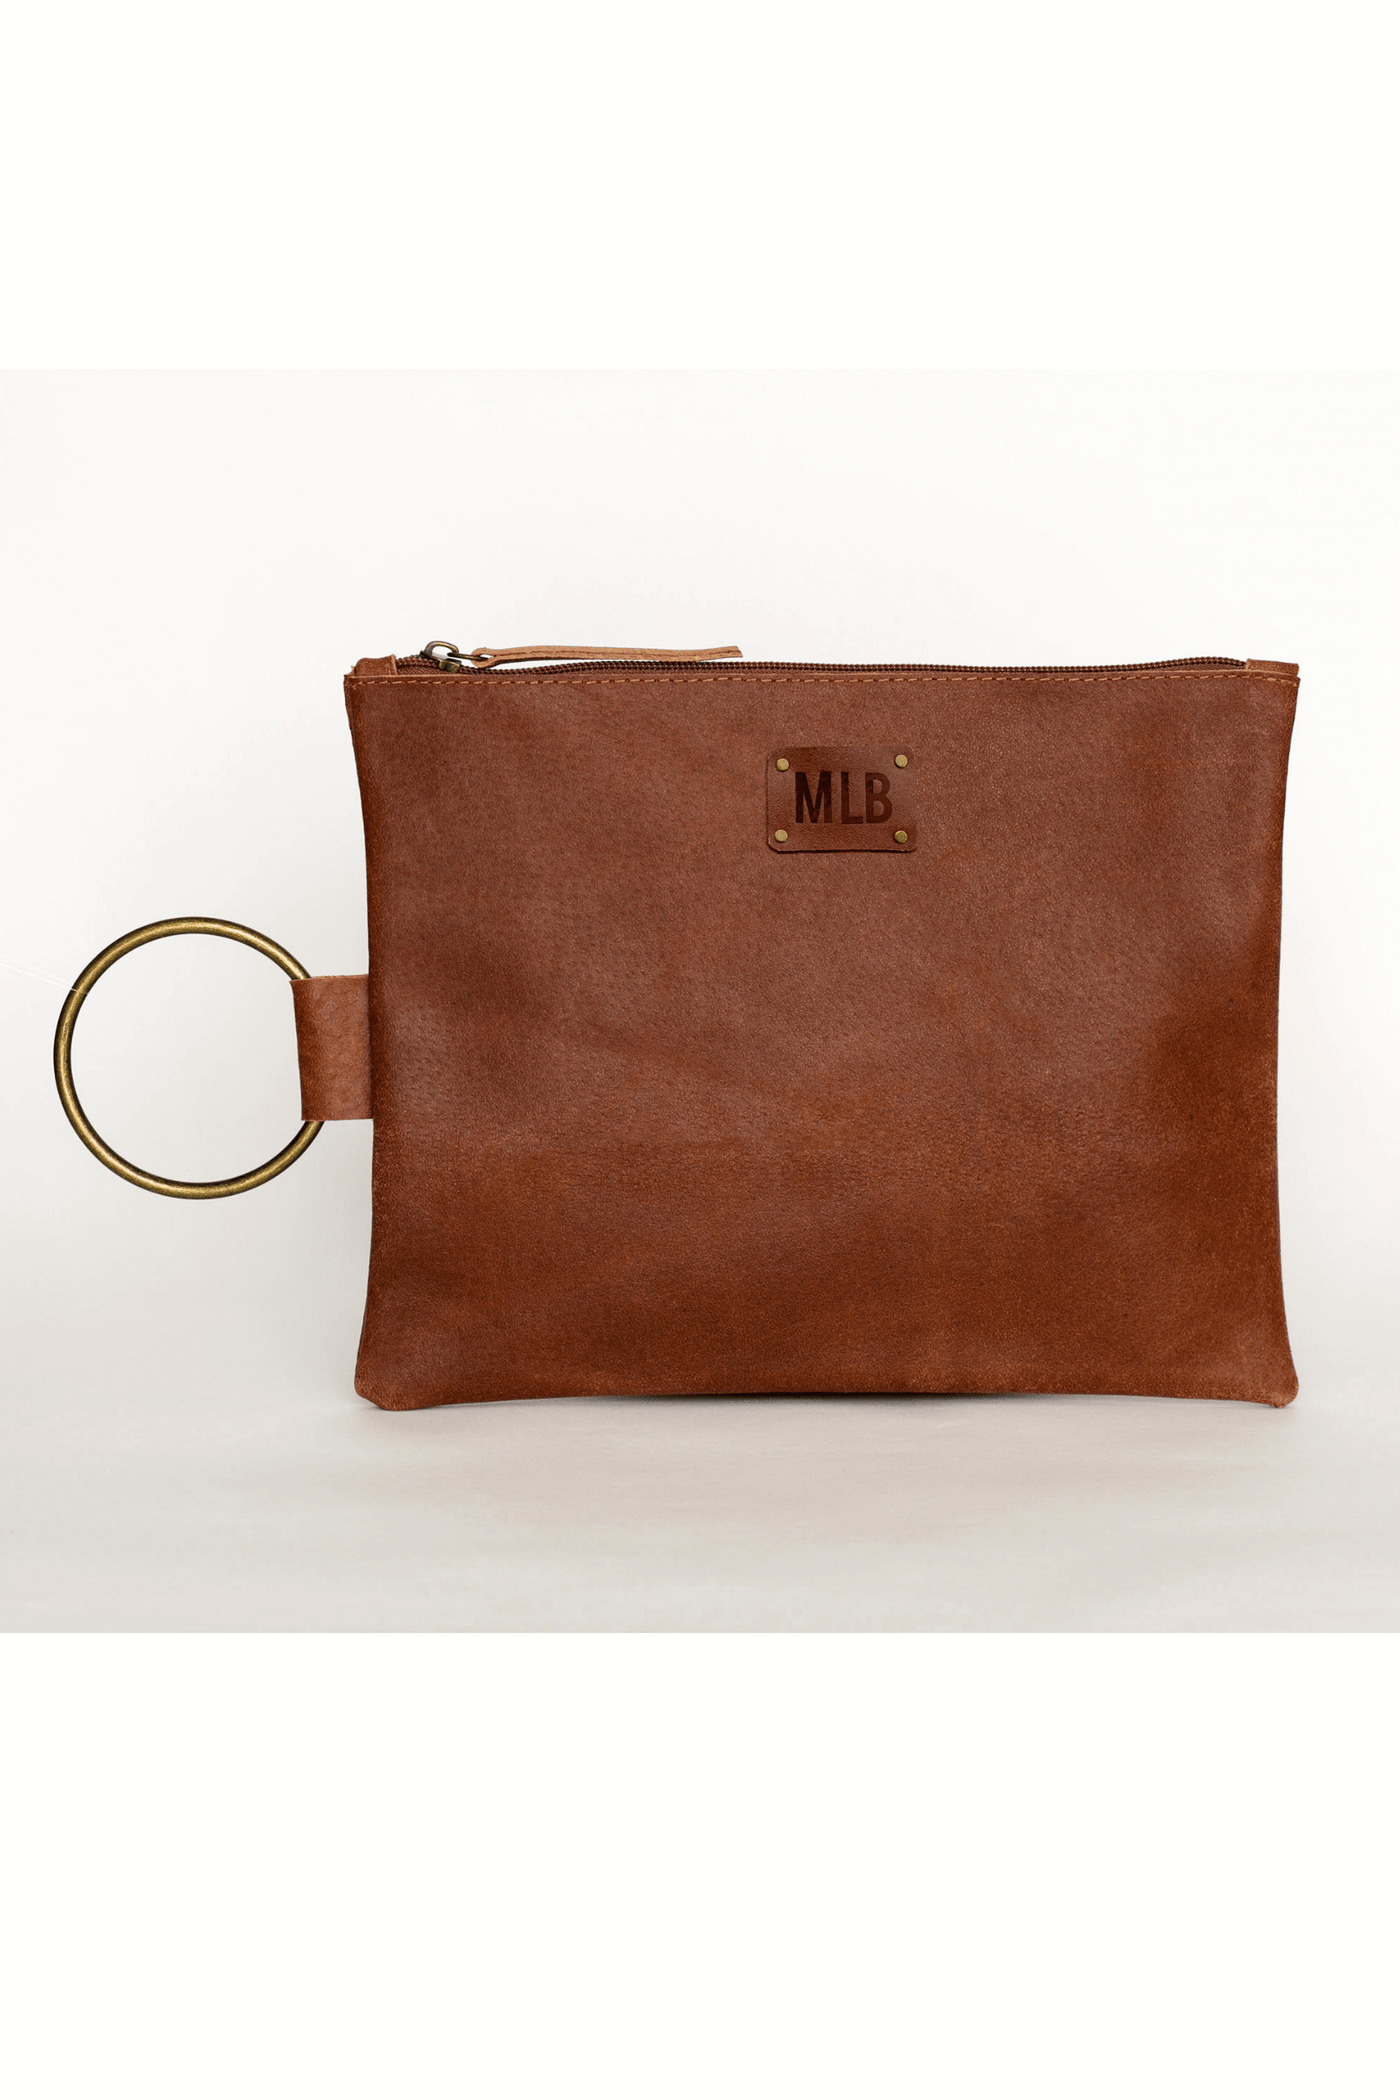 Leather Clutch Bag, Wrislet Purse, Small Wrislet Pouch | Mayko Bags